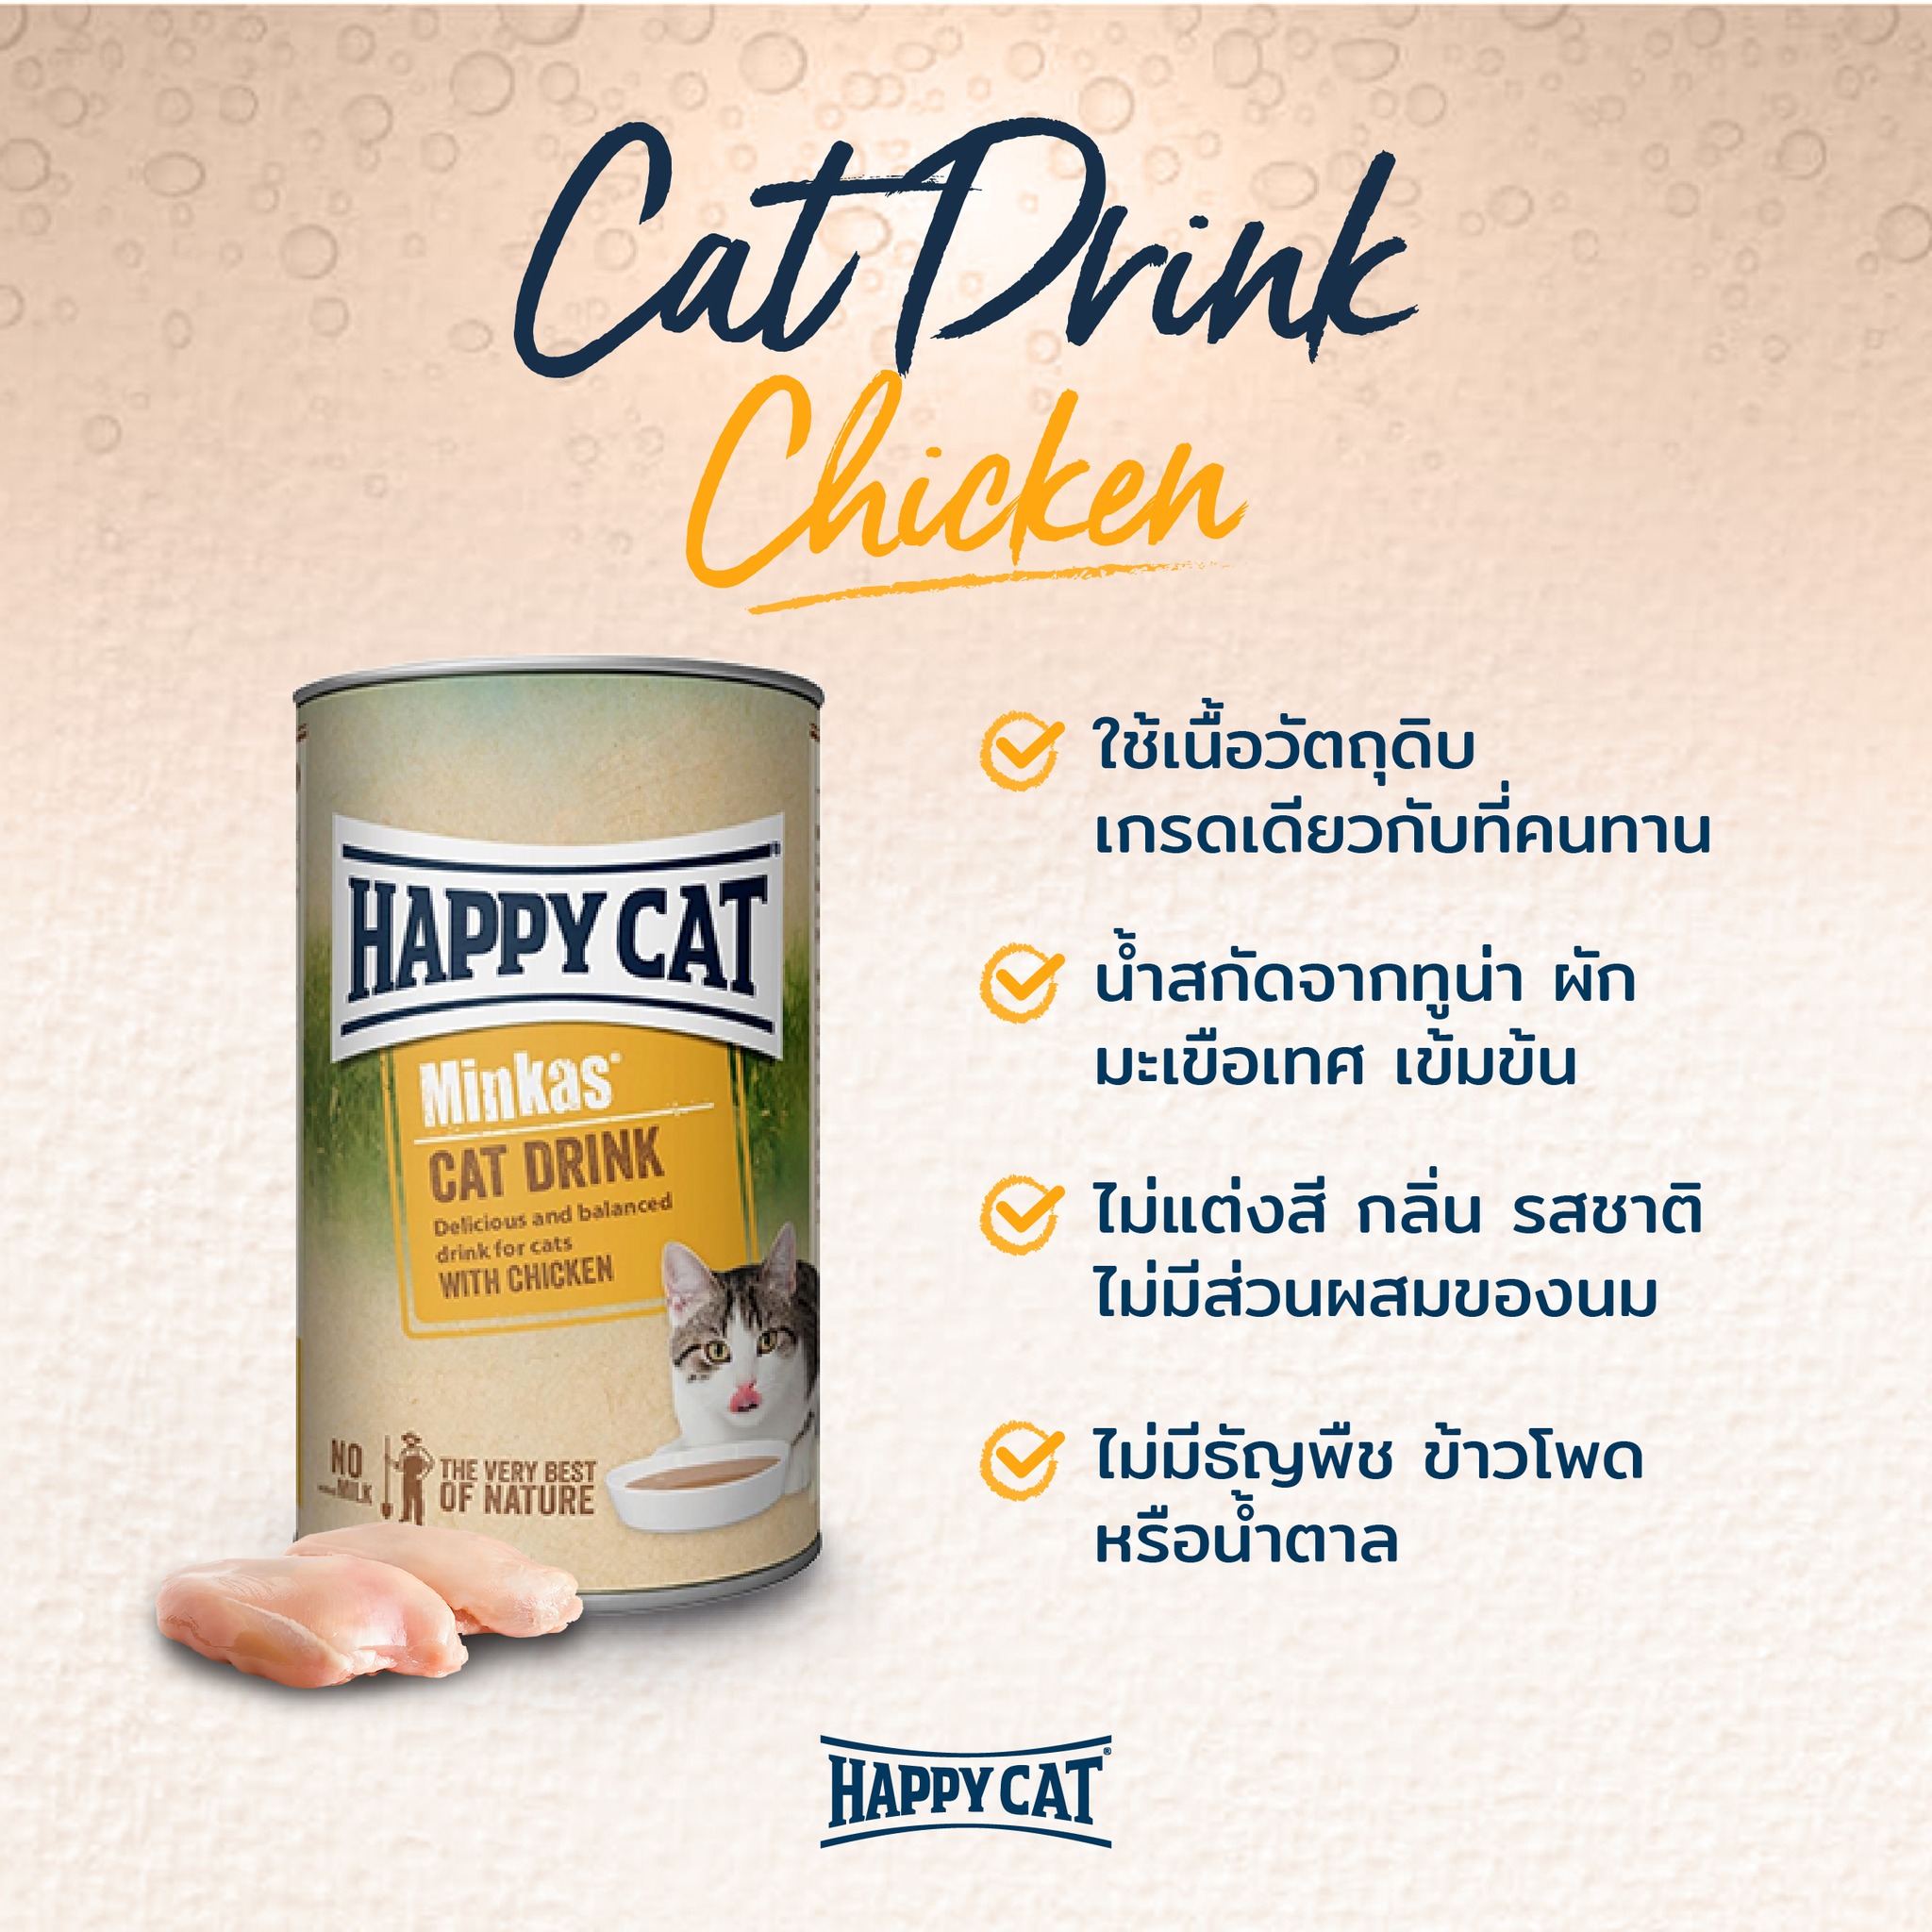 Happy Cat Minkas Cat Drink คละสูตร - ไก่ แซลมอน ทูน่า